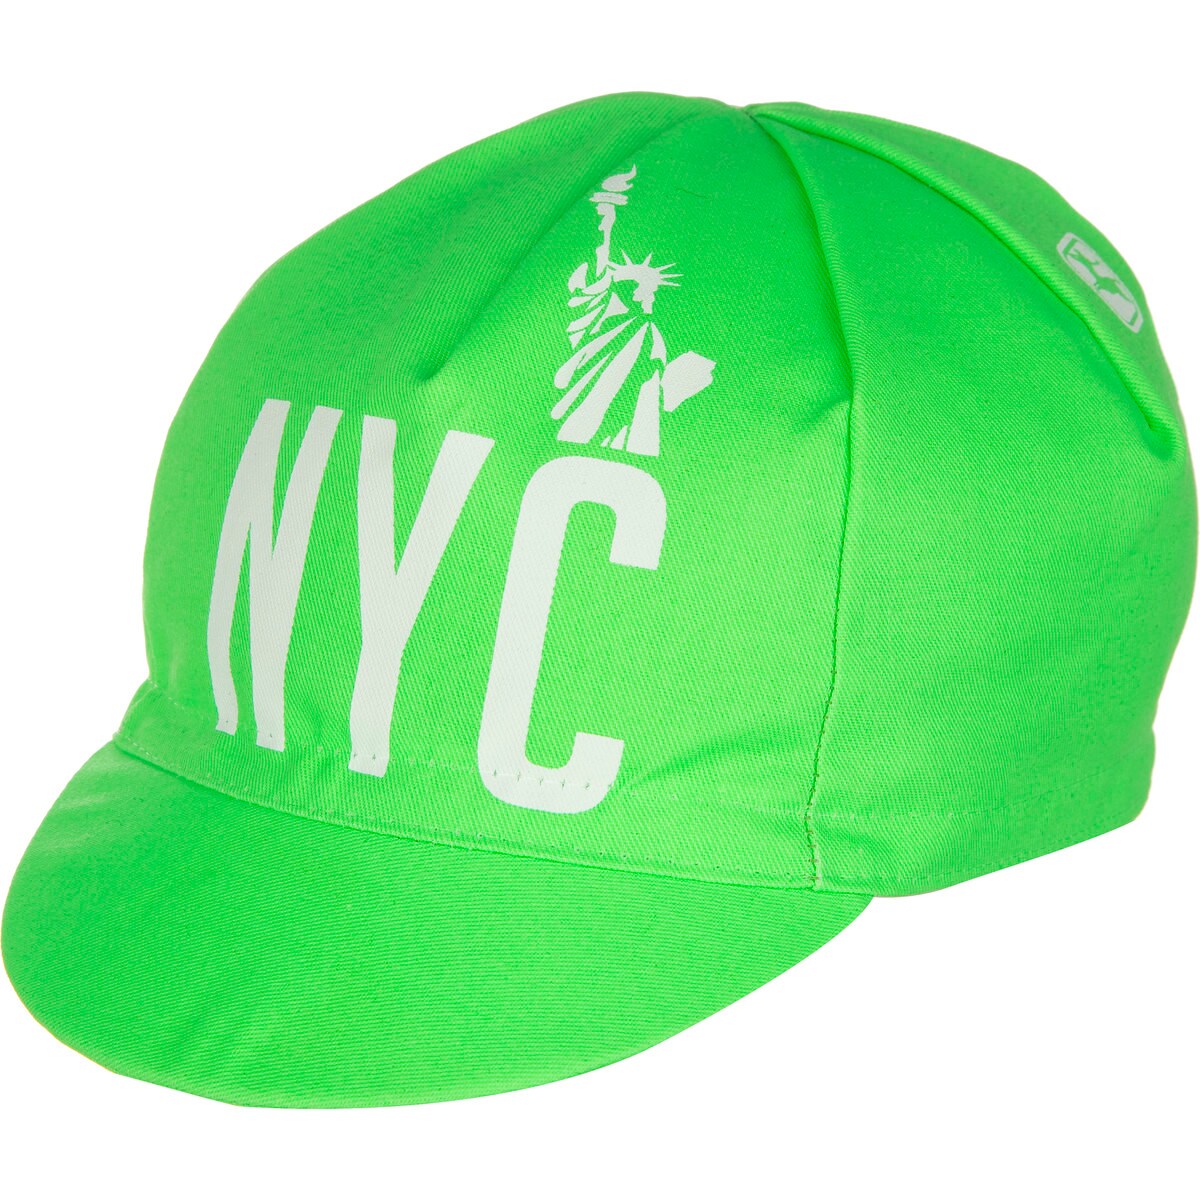 Giordana New York City Cycling Cap